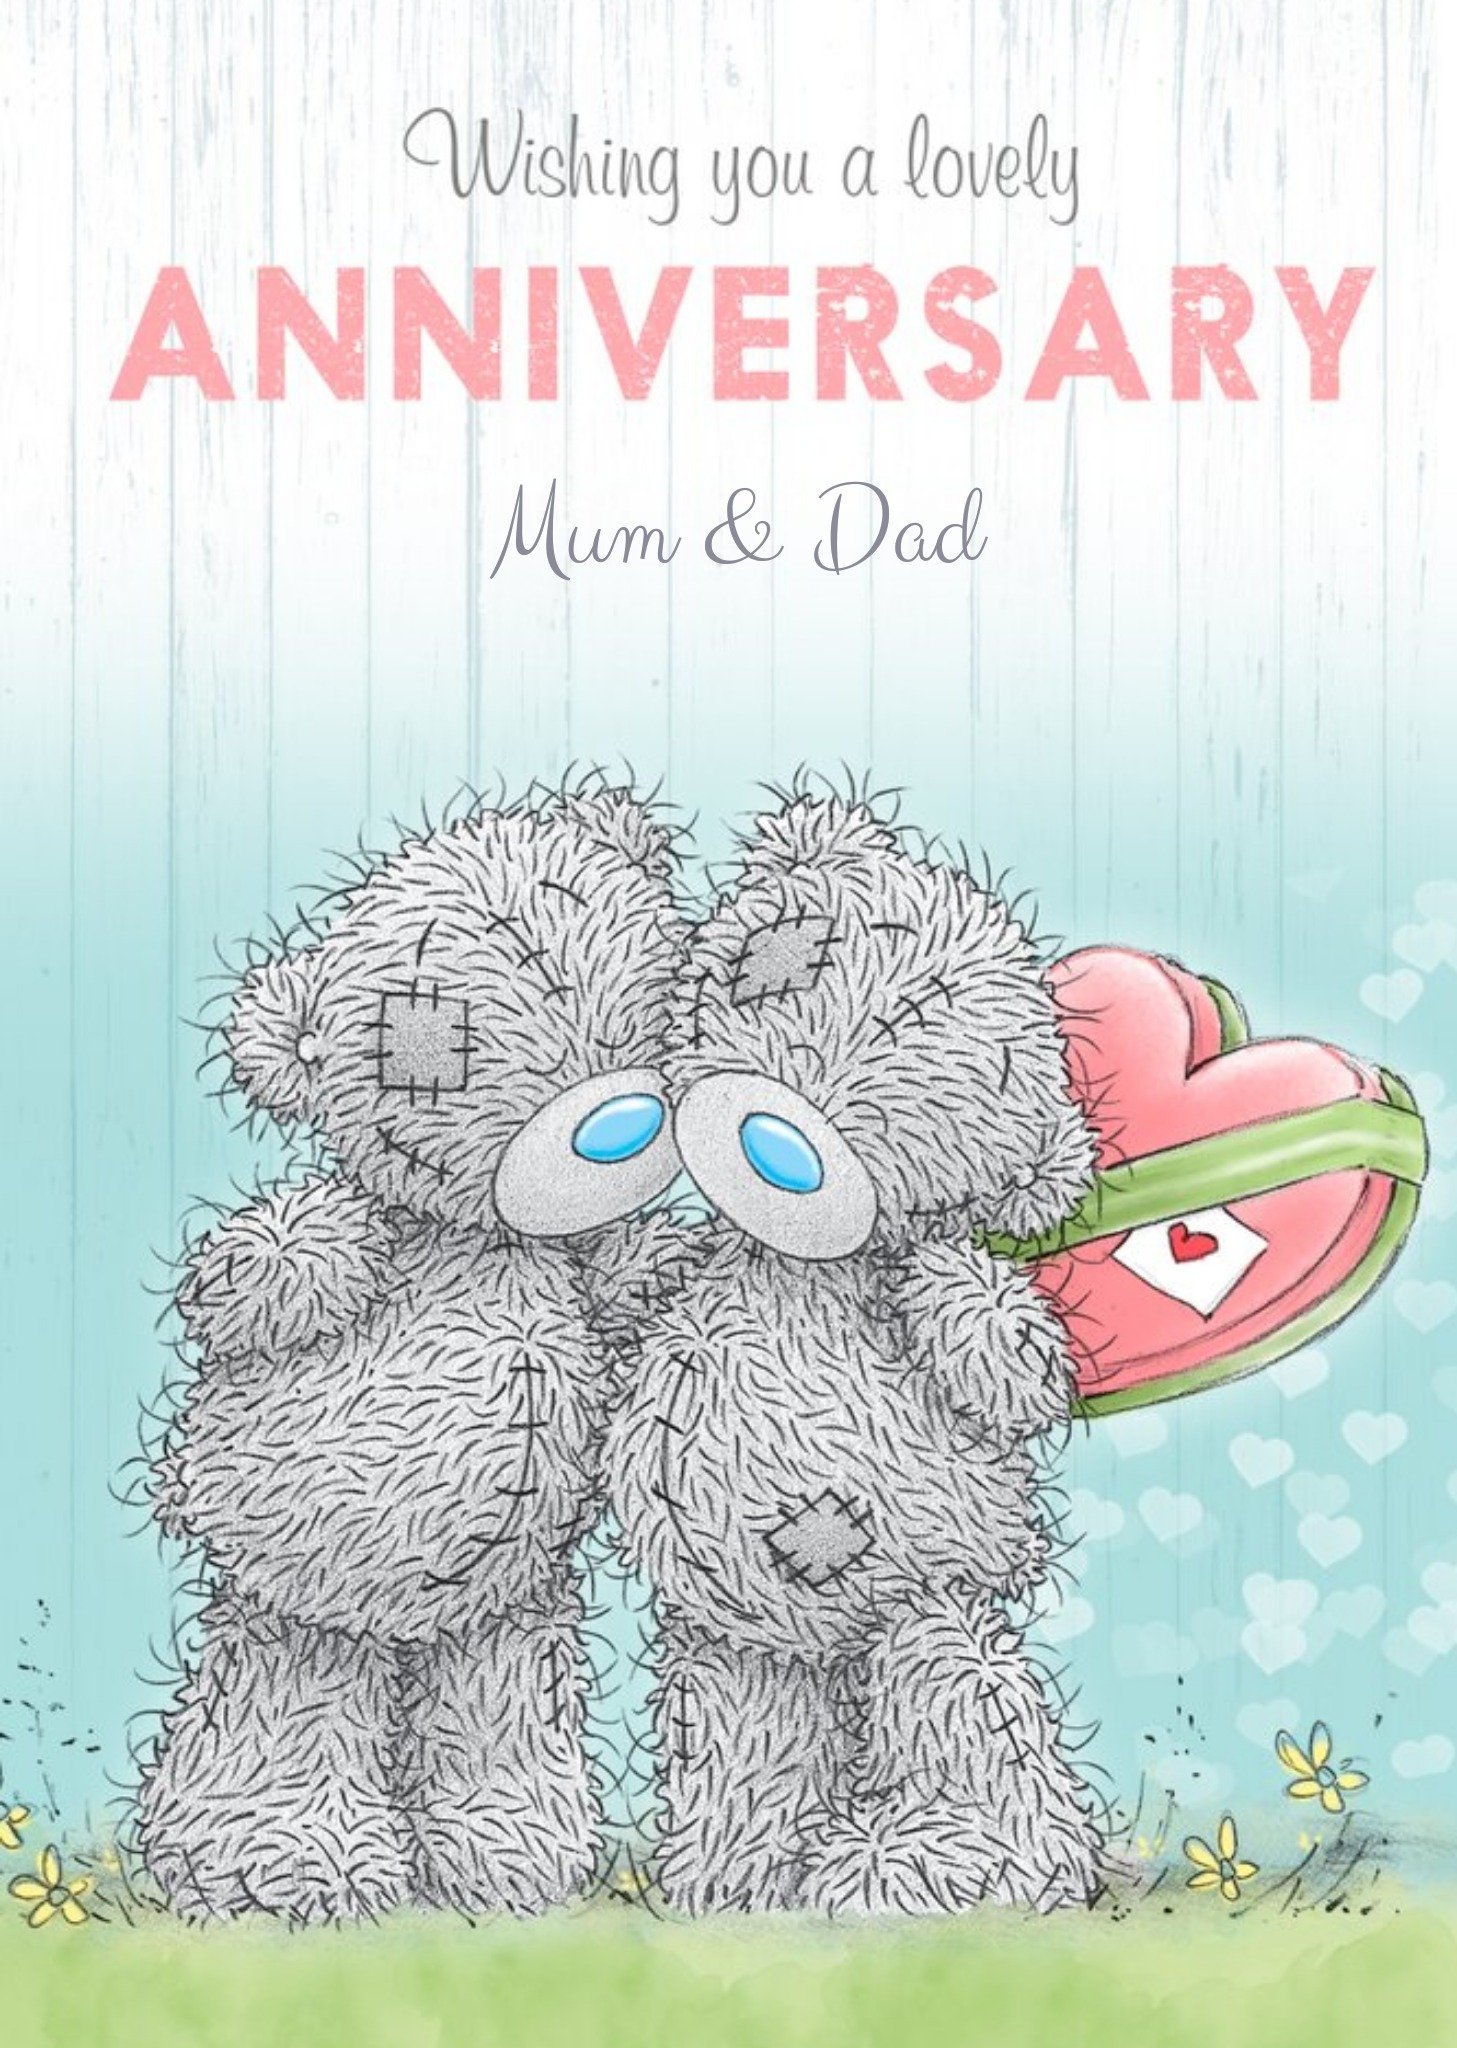 Me To You Mum & Dad Anniversary Card Ecard